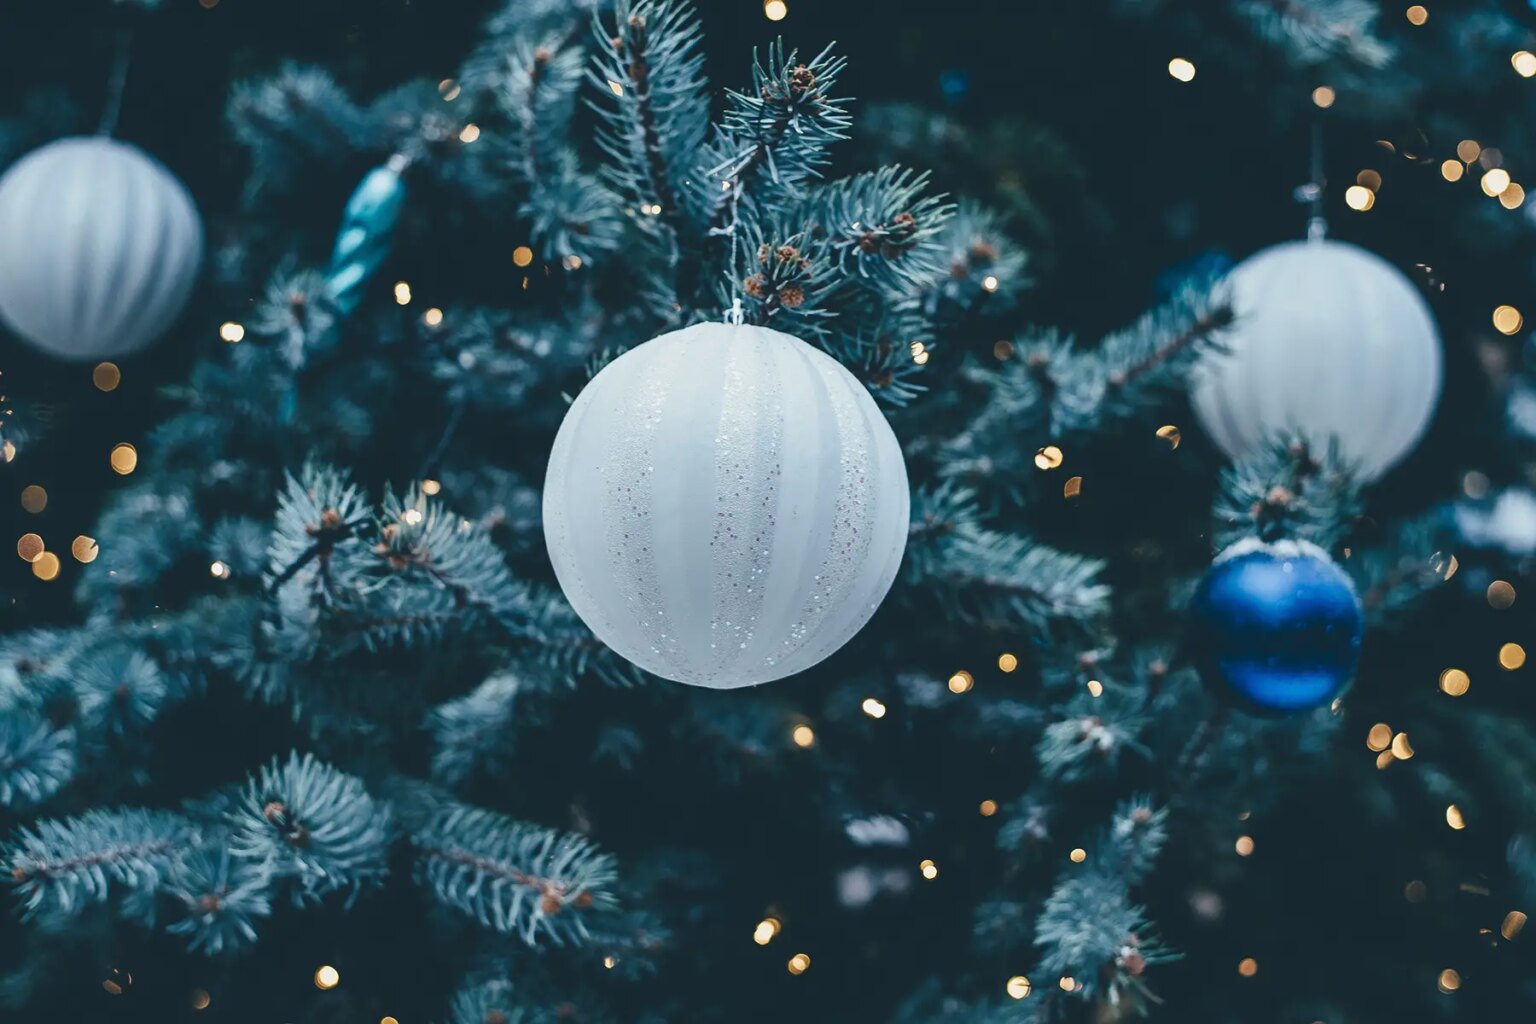 History of Christmas trees